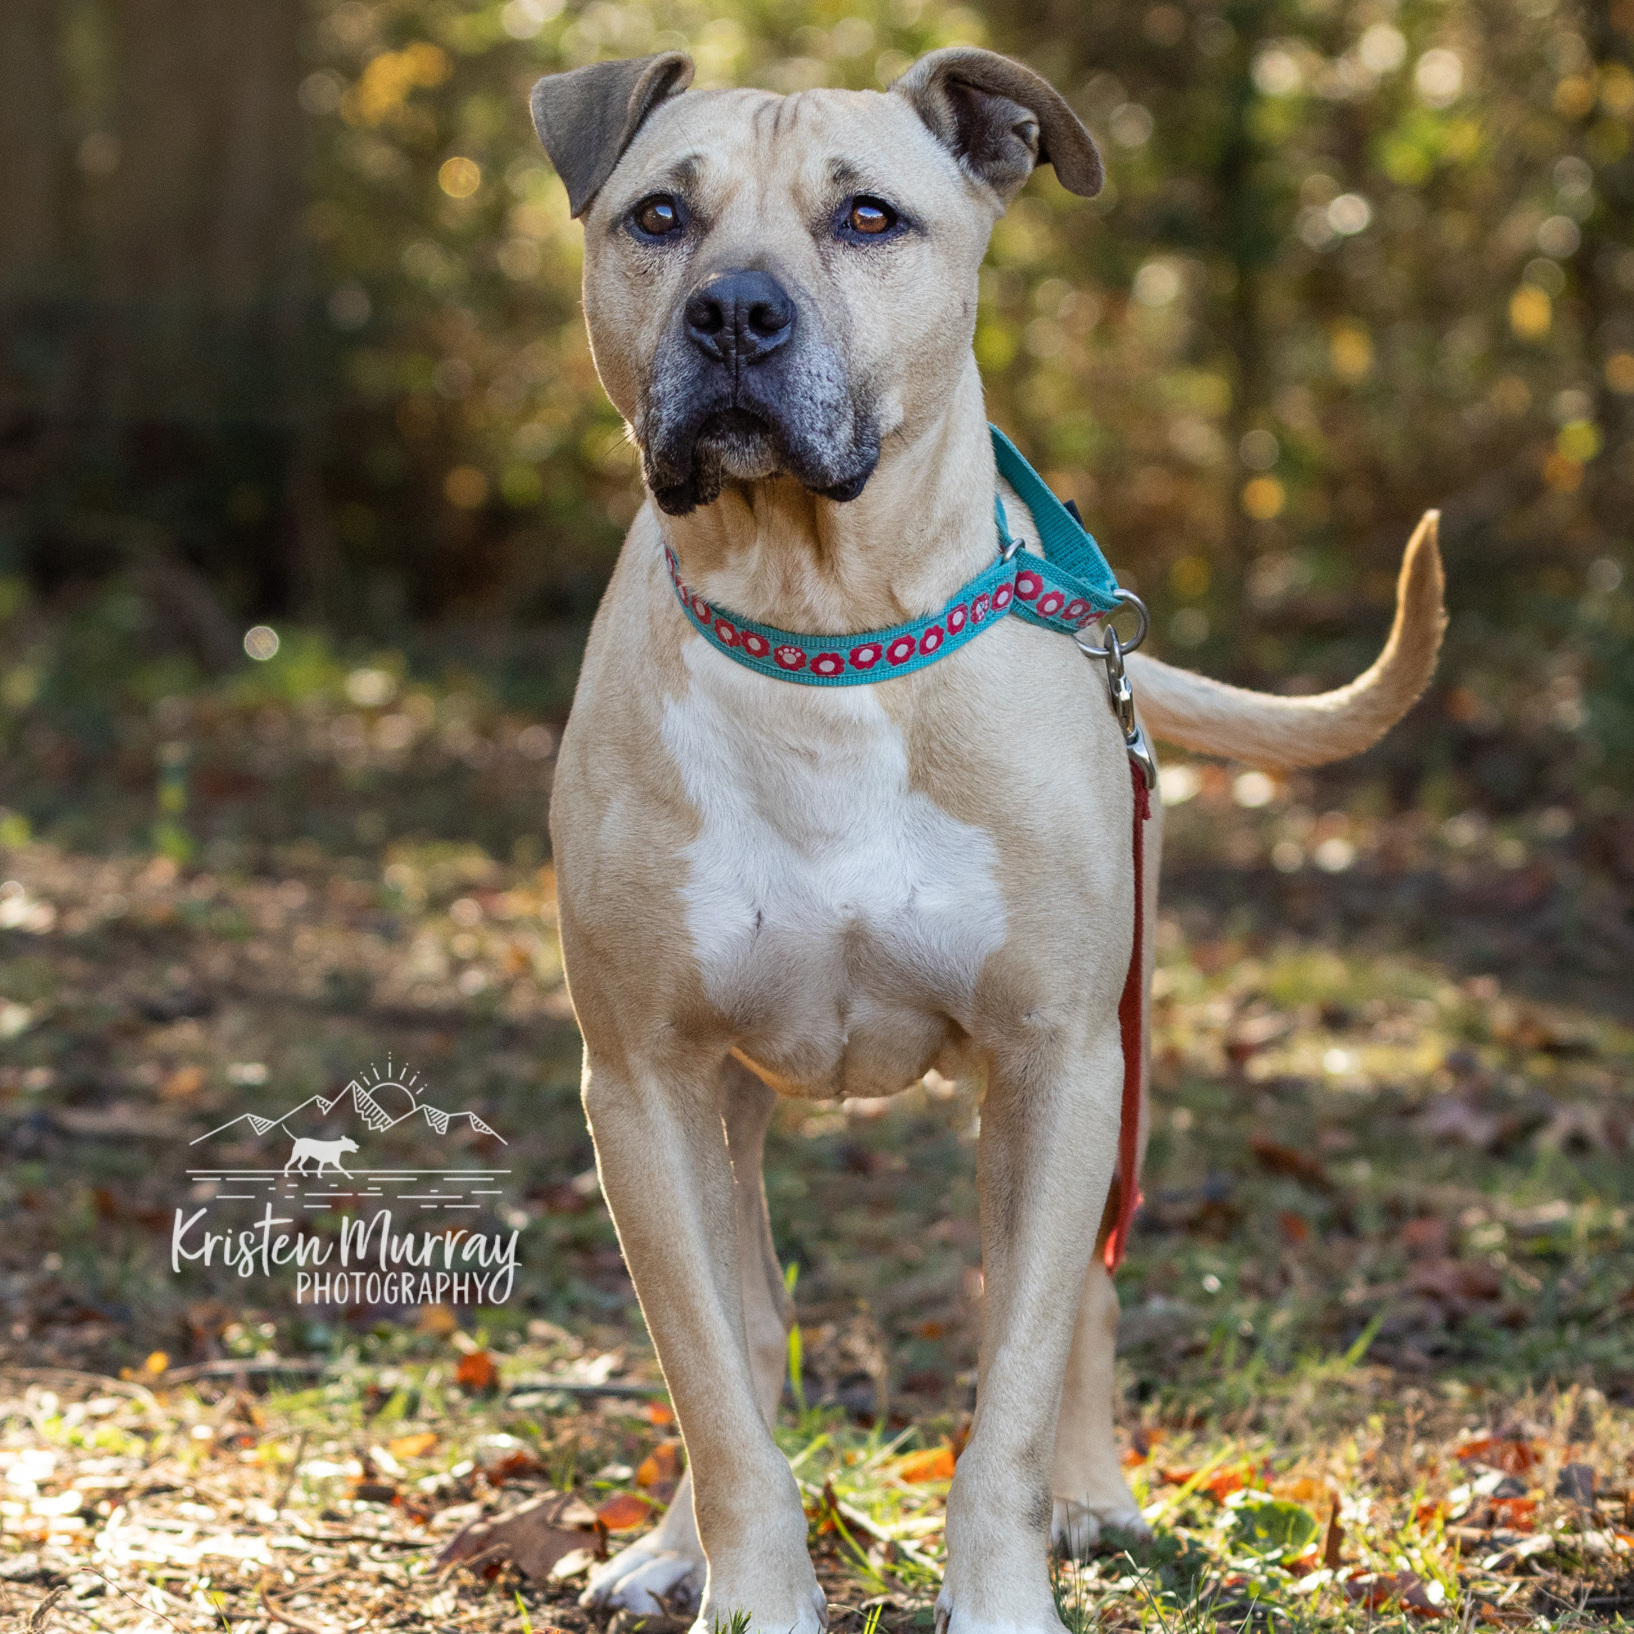 Boy George - star potential, an adoptable Labrador Retriever in Midlothian, VA, 23112 | Photo Image 4